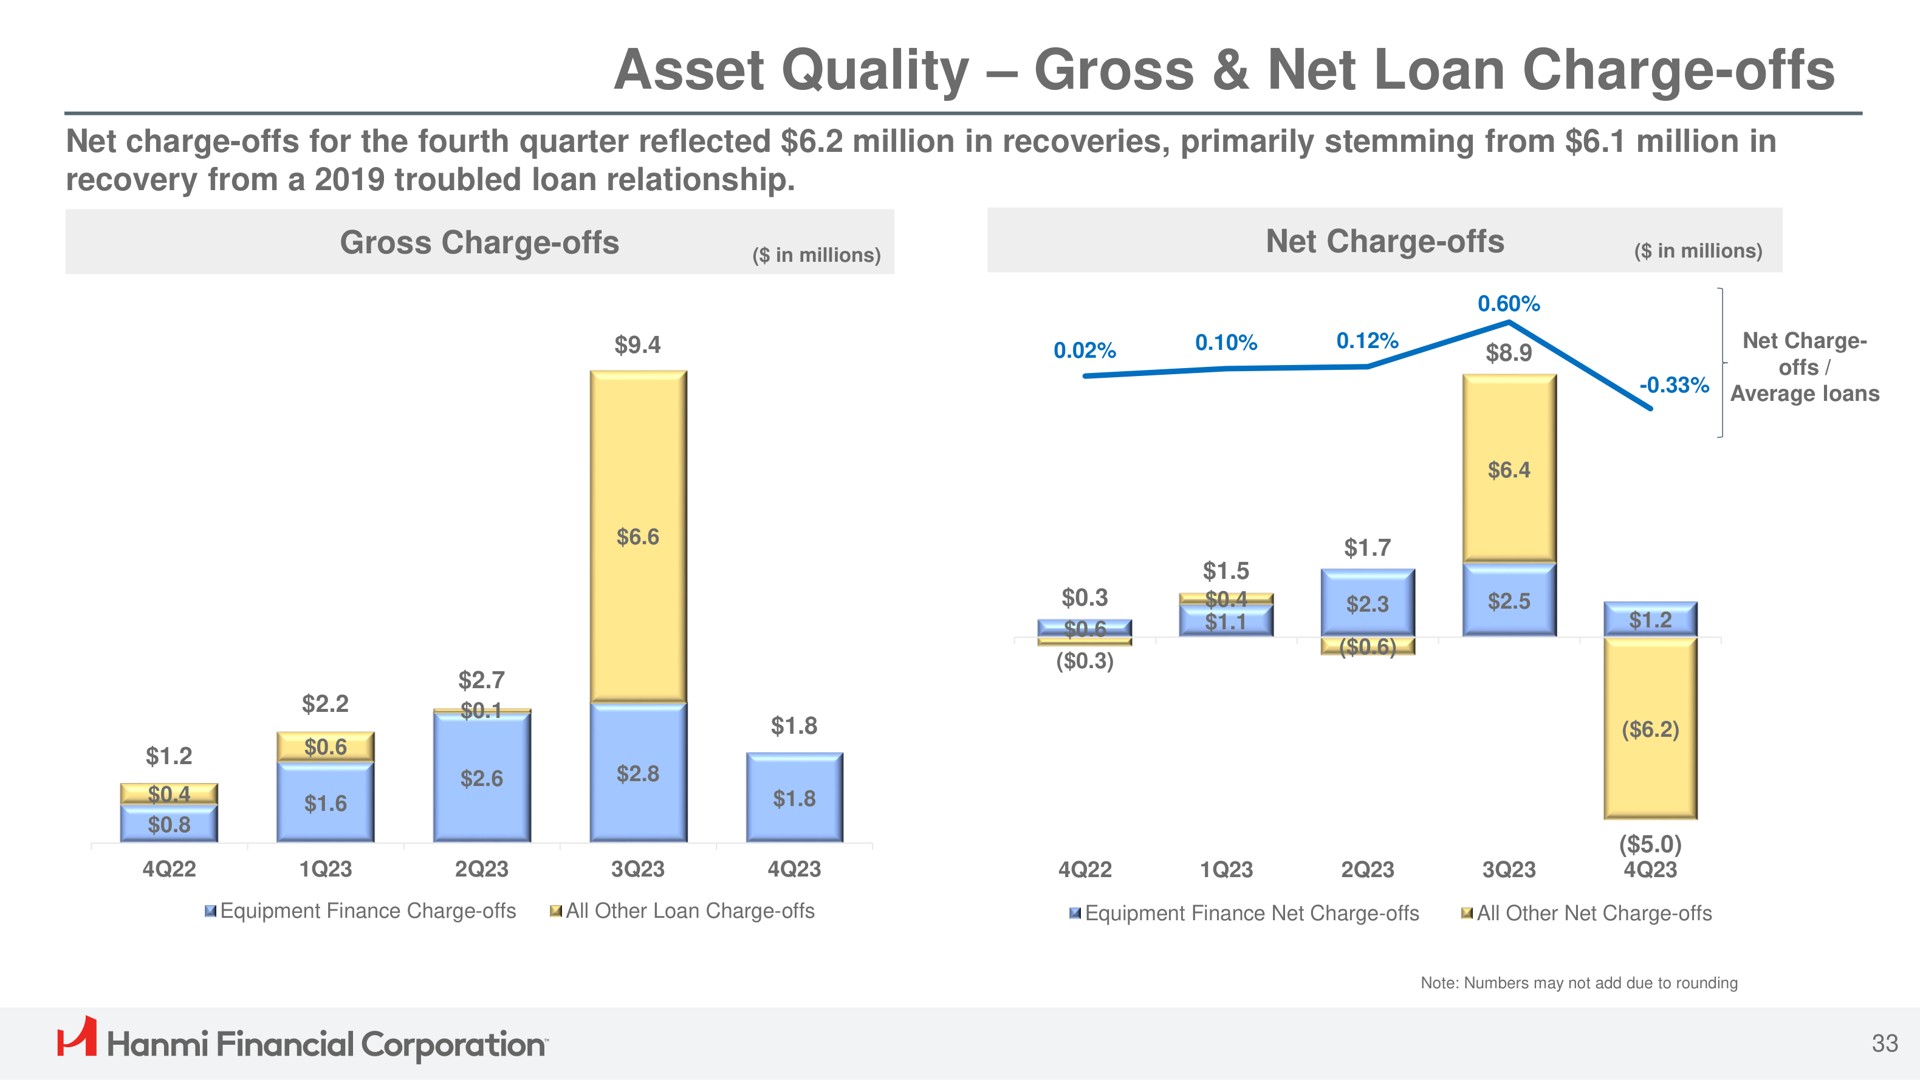 asset quality gross net loan charge offs a financial corporation | Hanmi Financial